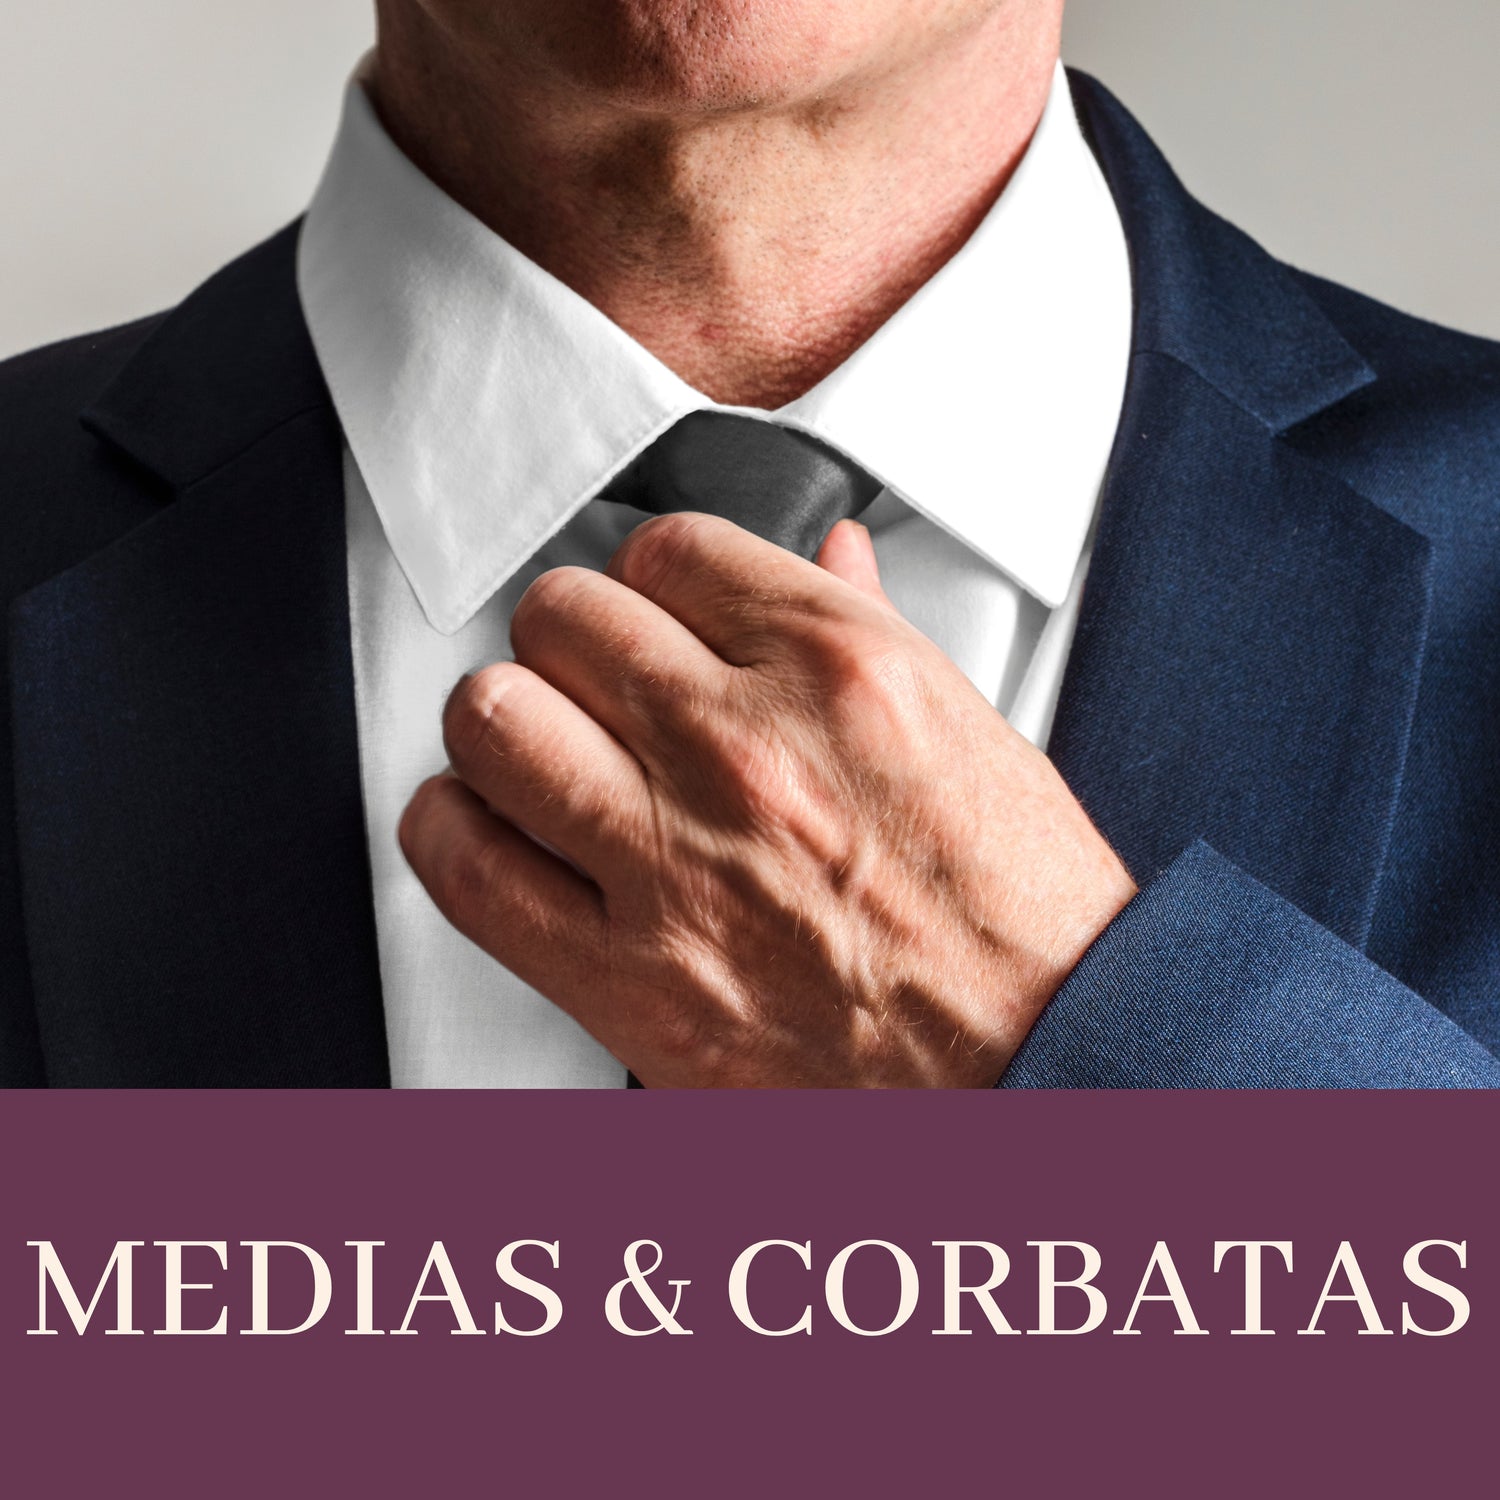 MEDIAS & CORBATAS